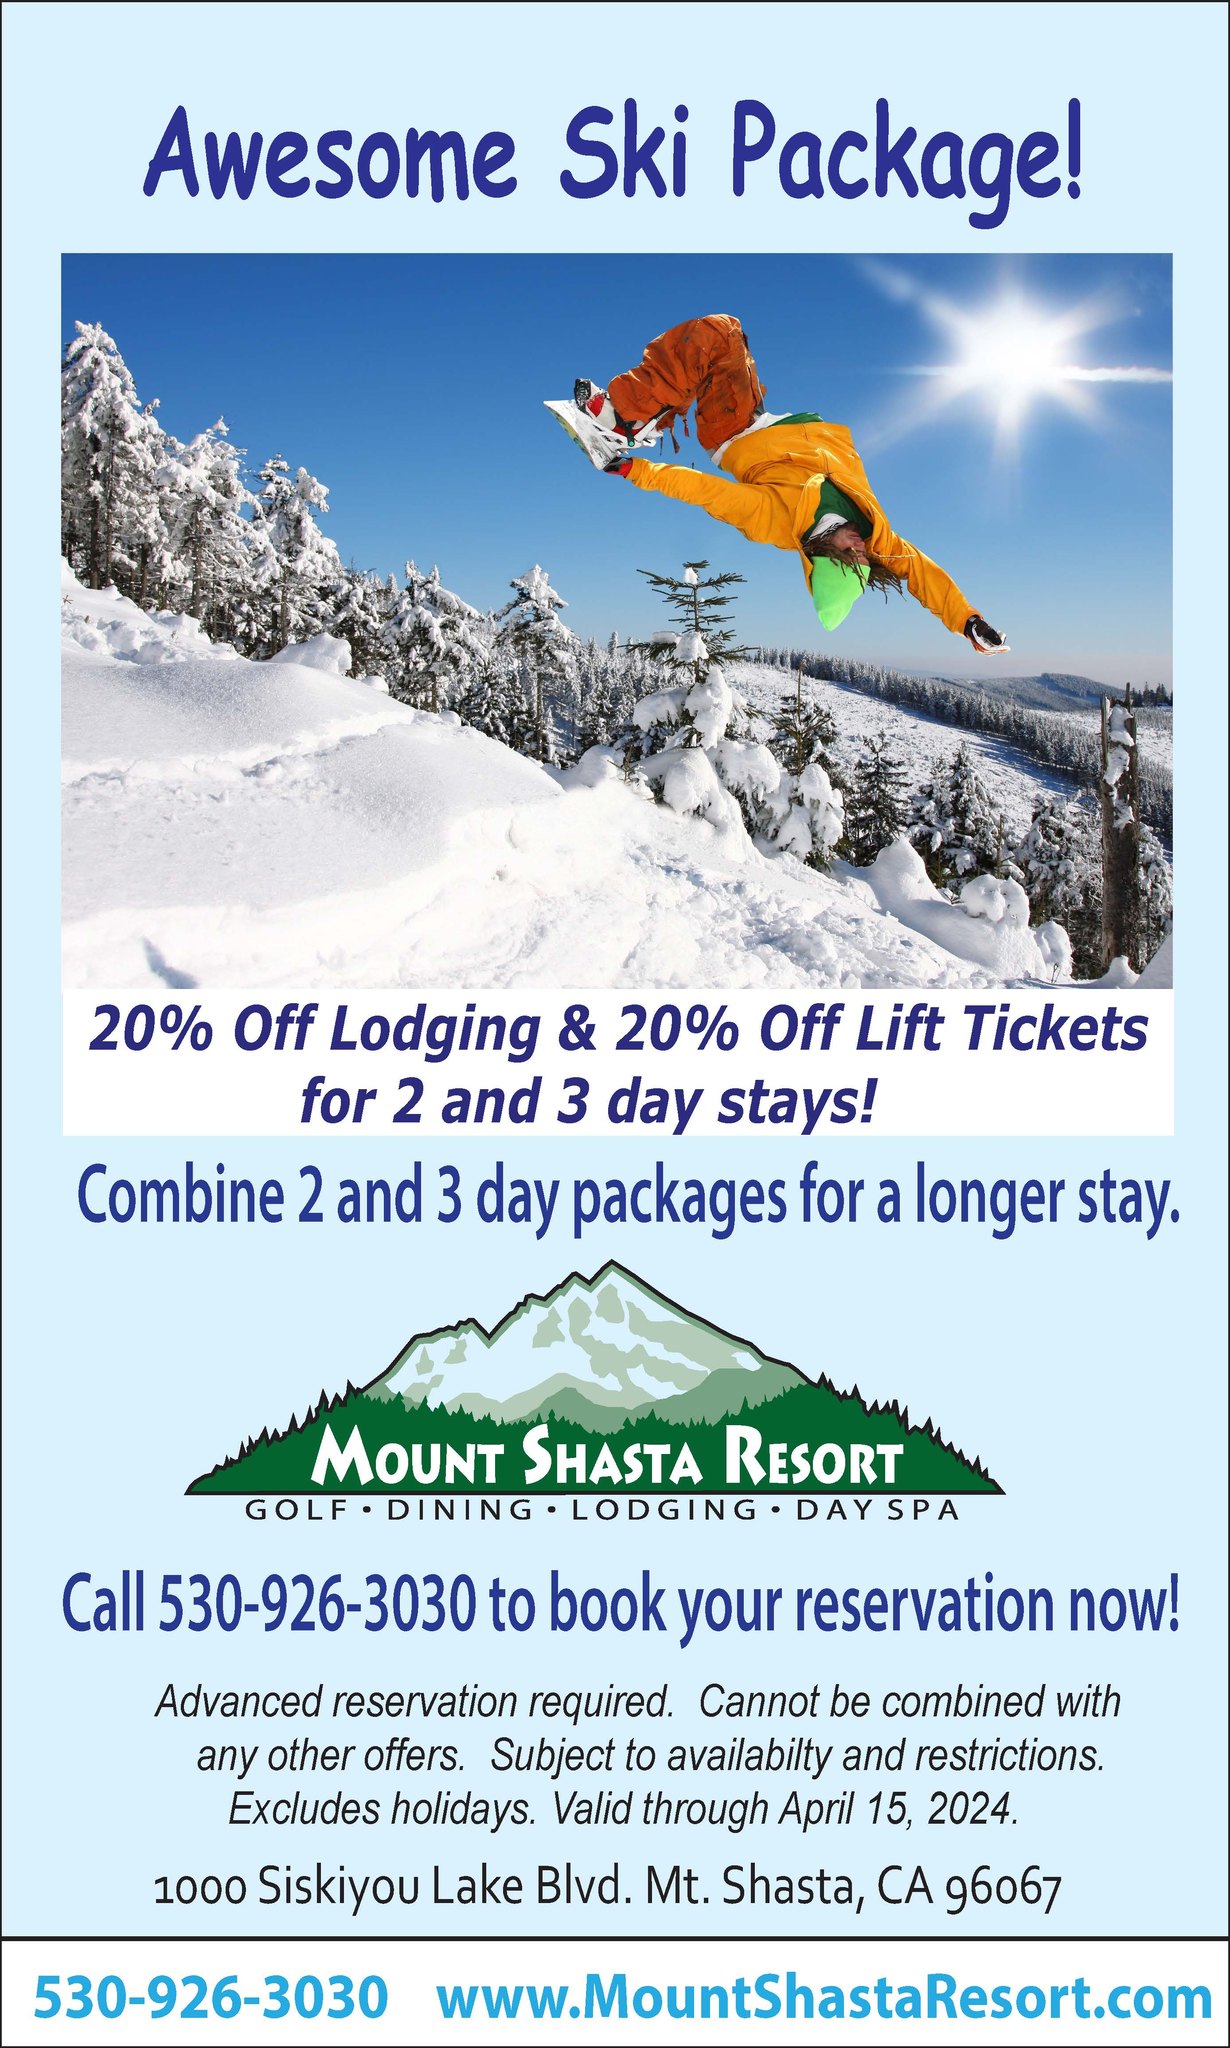 Mount Shasta Resort 1000 Siskiyou Lake Blvd, Mt Shasta California 96067